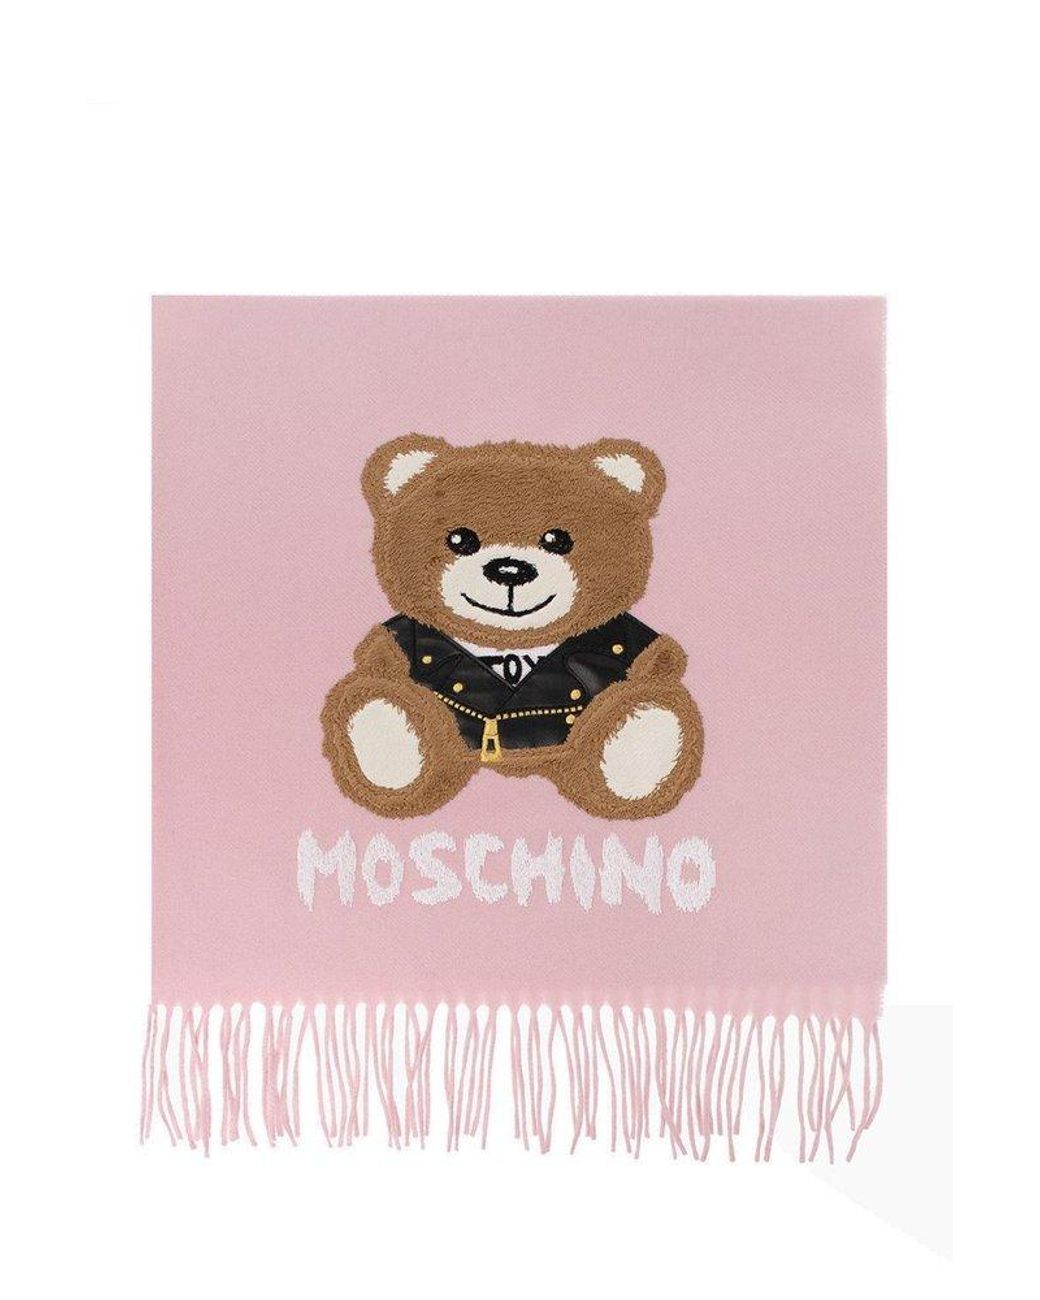 Moschino Teddy Bear Printed Fringed Scarf in Pink | Lyst